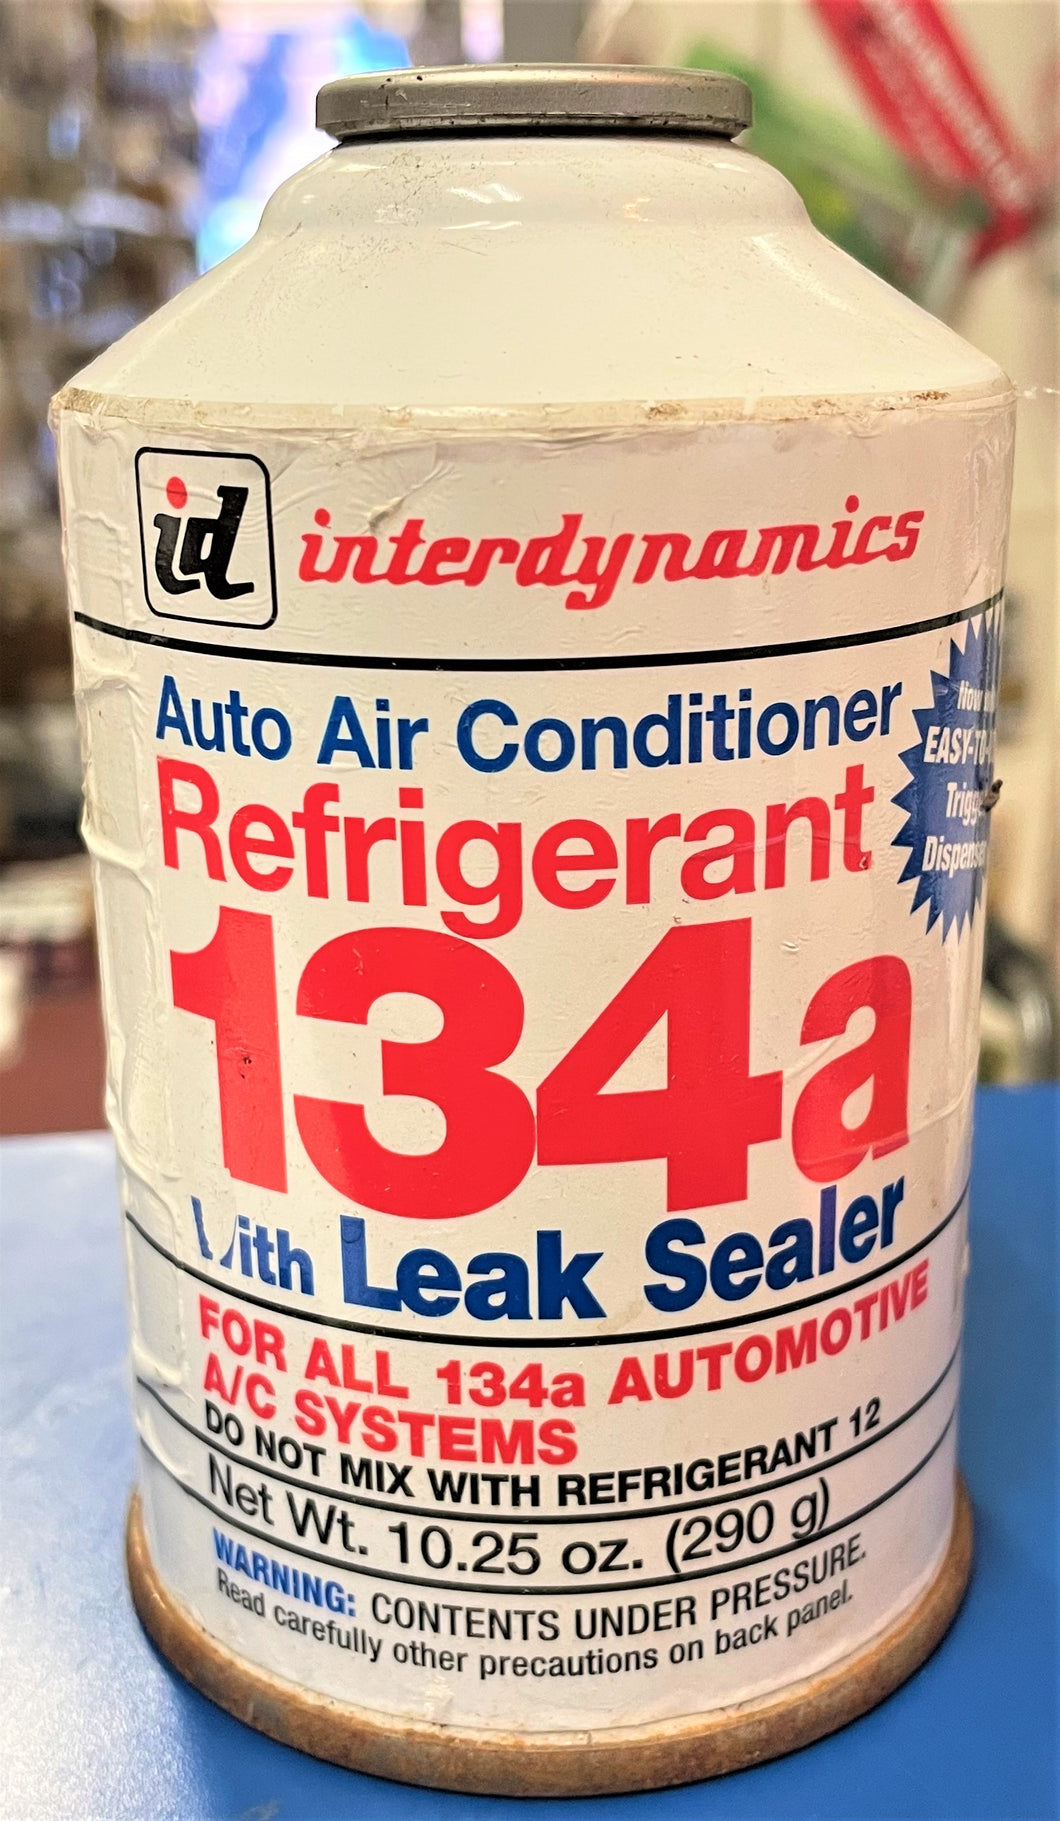 Interdynamics R134a Refrigerant Leak Sealer 12 oz. Self-Sealing Can